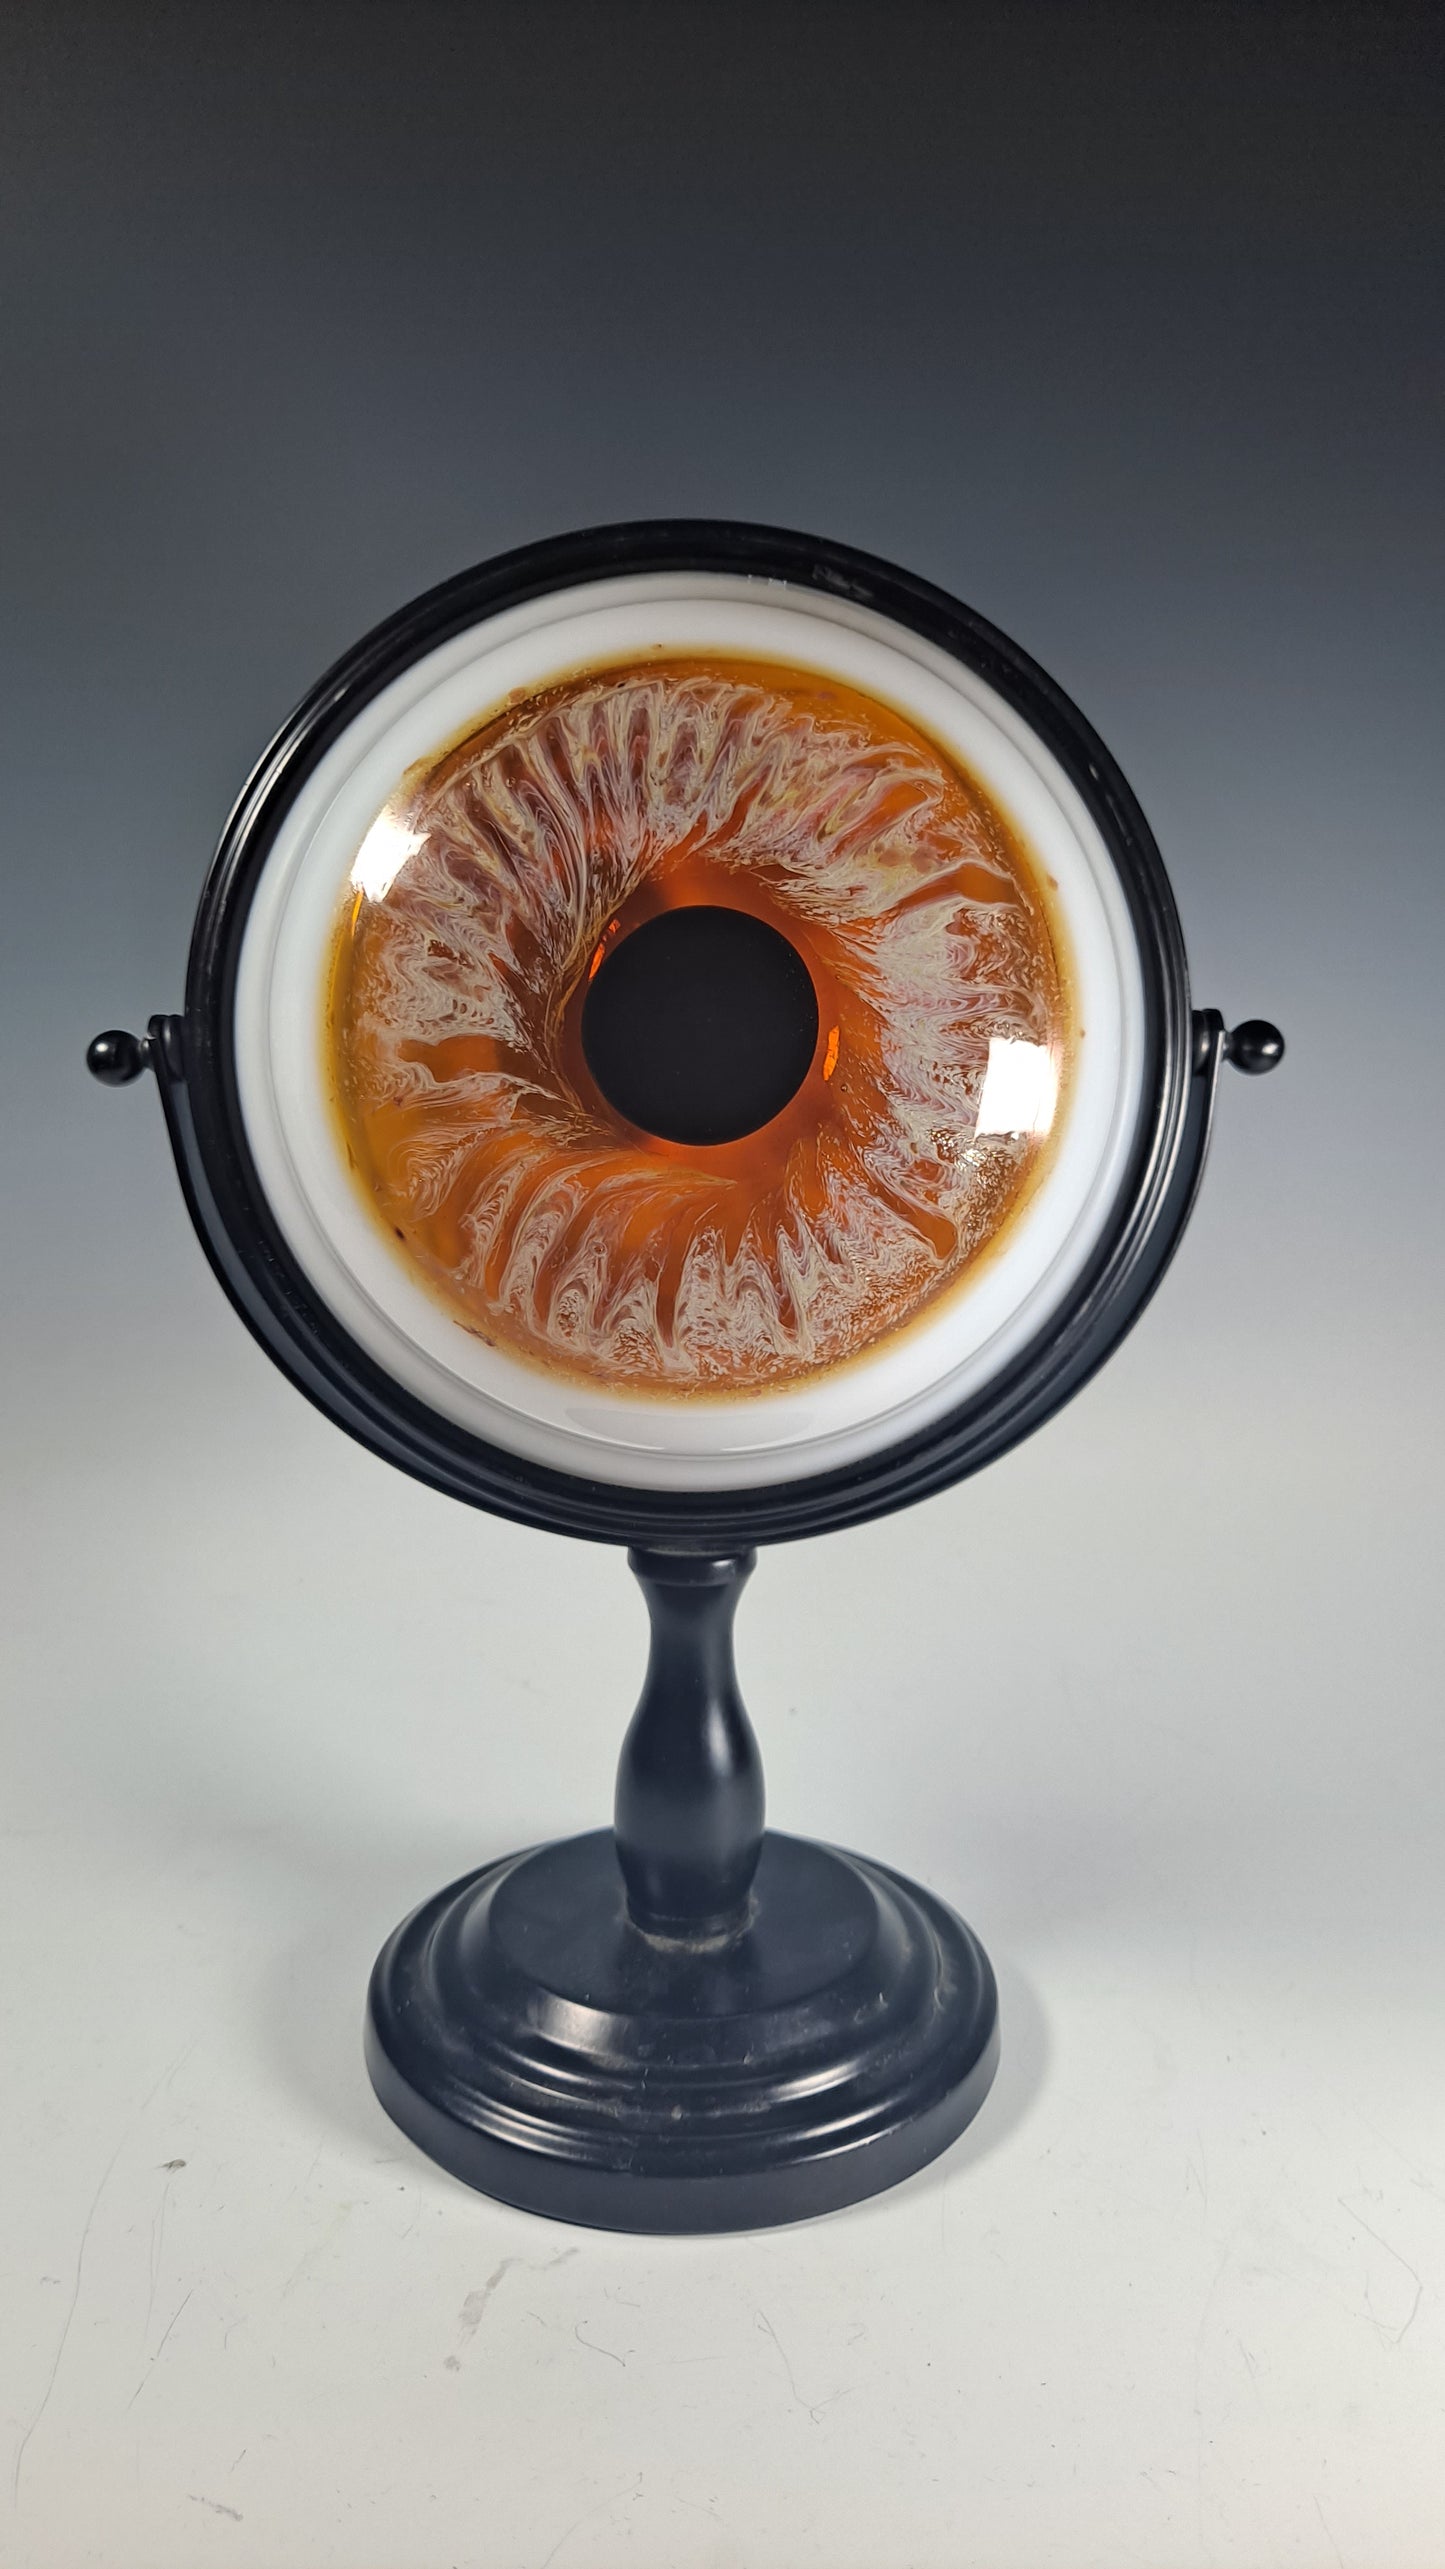 Rotating Eyeball Lamp, Limited Edition